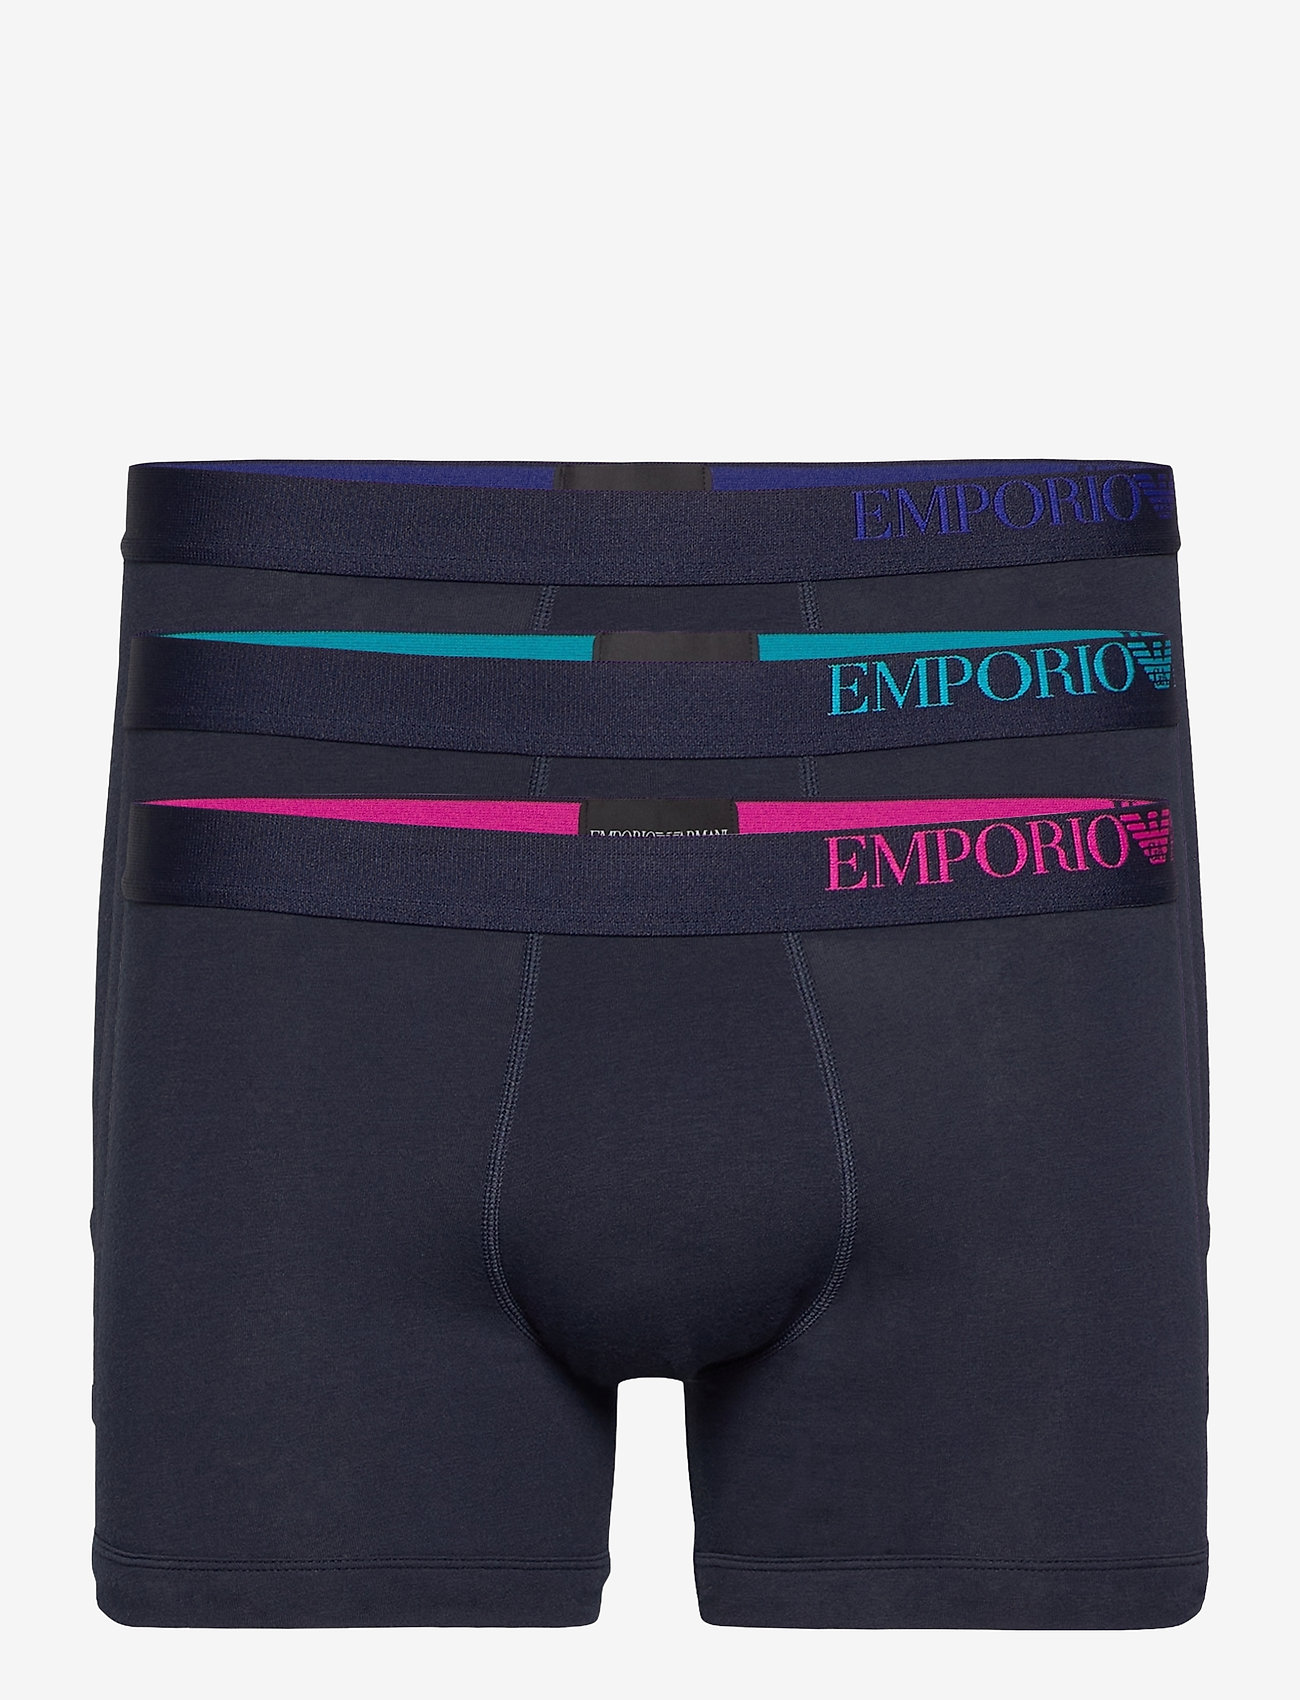 Emporio Armani Men's Knit 3-pack Boxershorts - Undirbuxur | Boozt.com